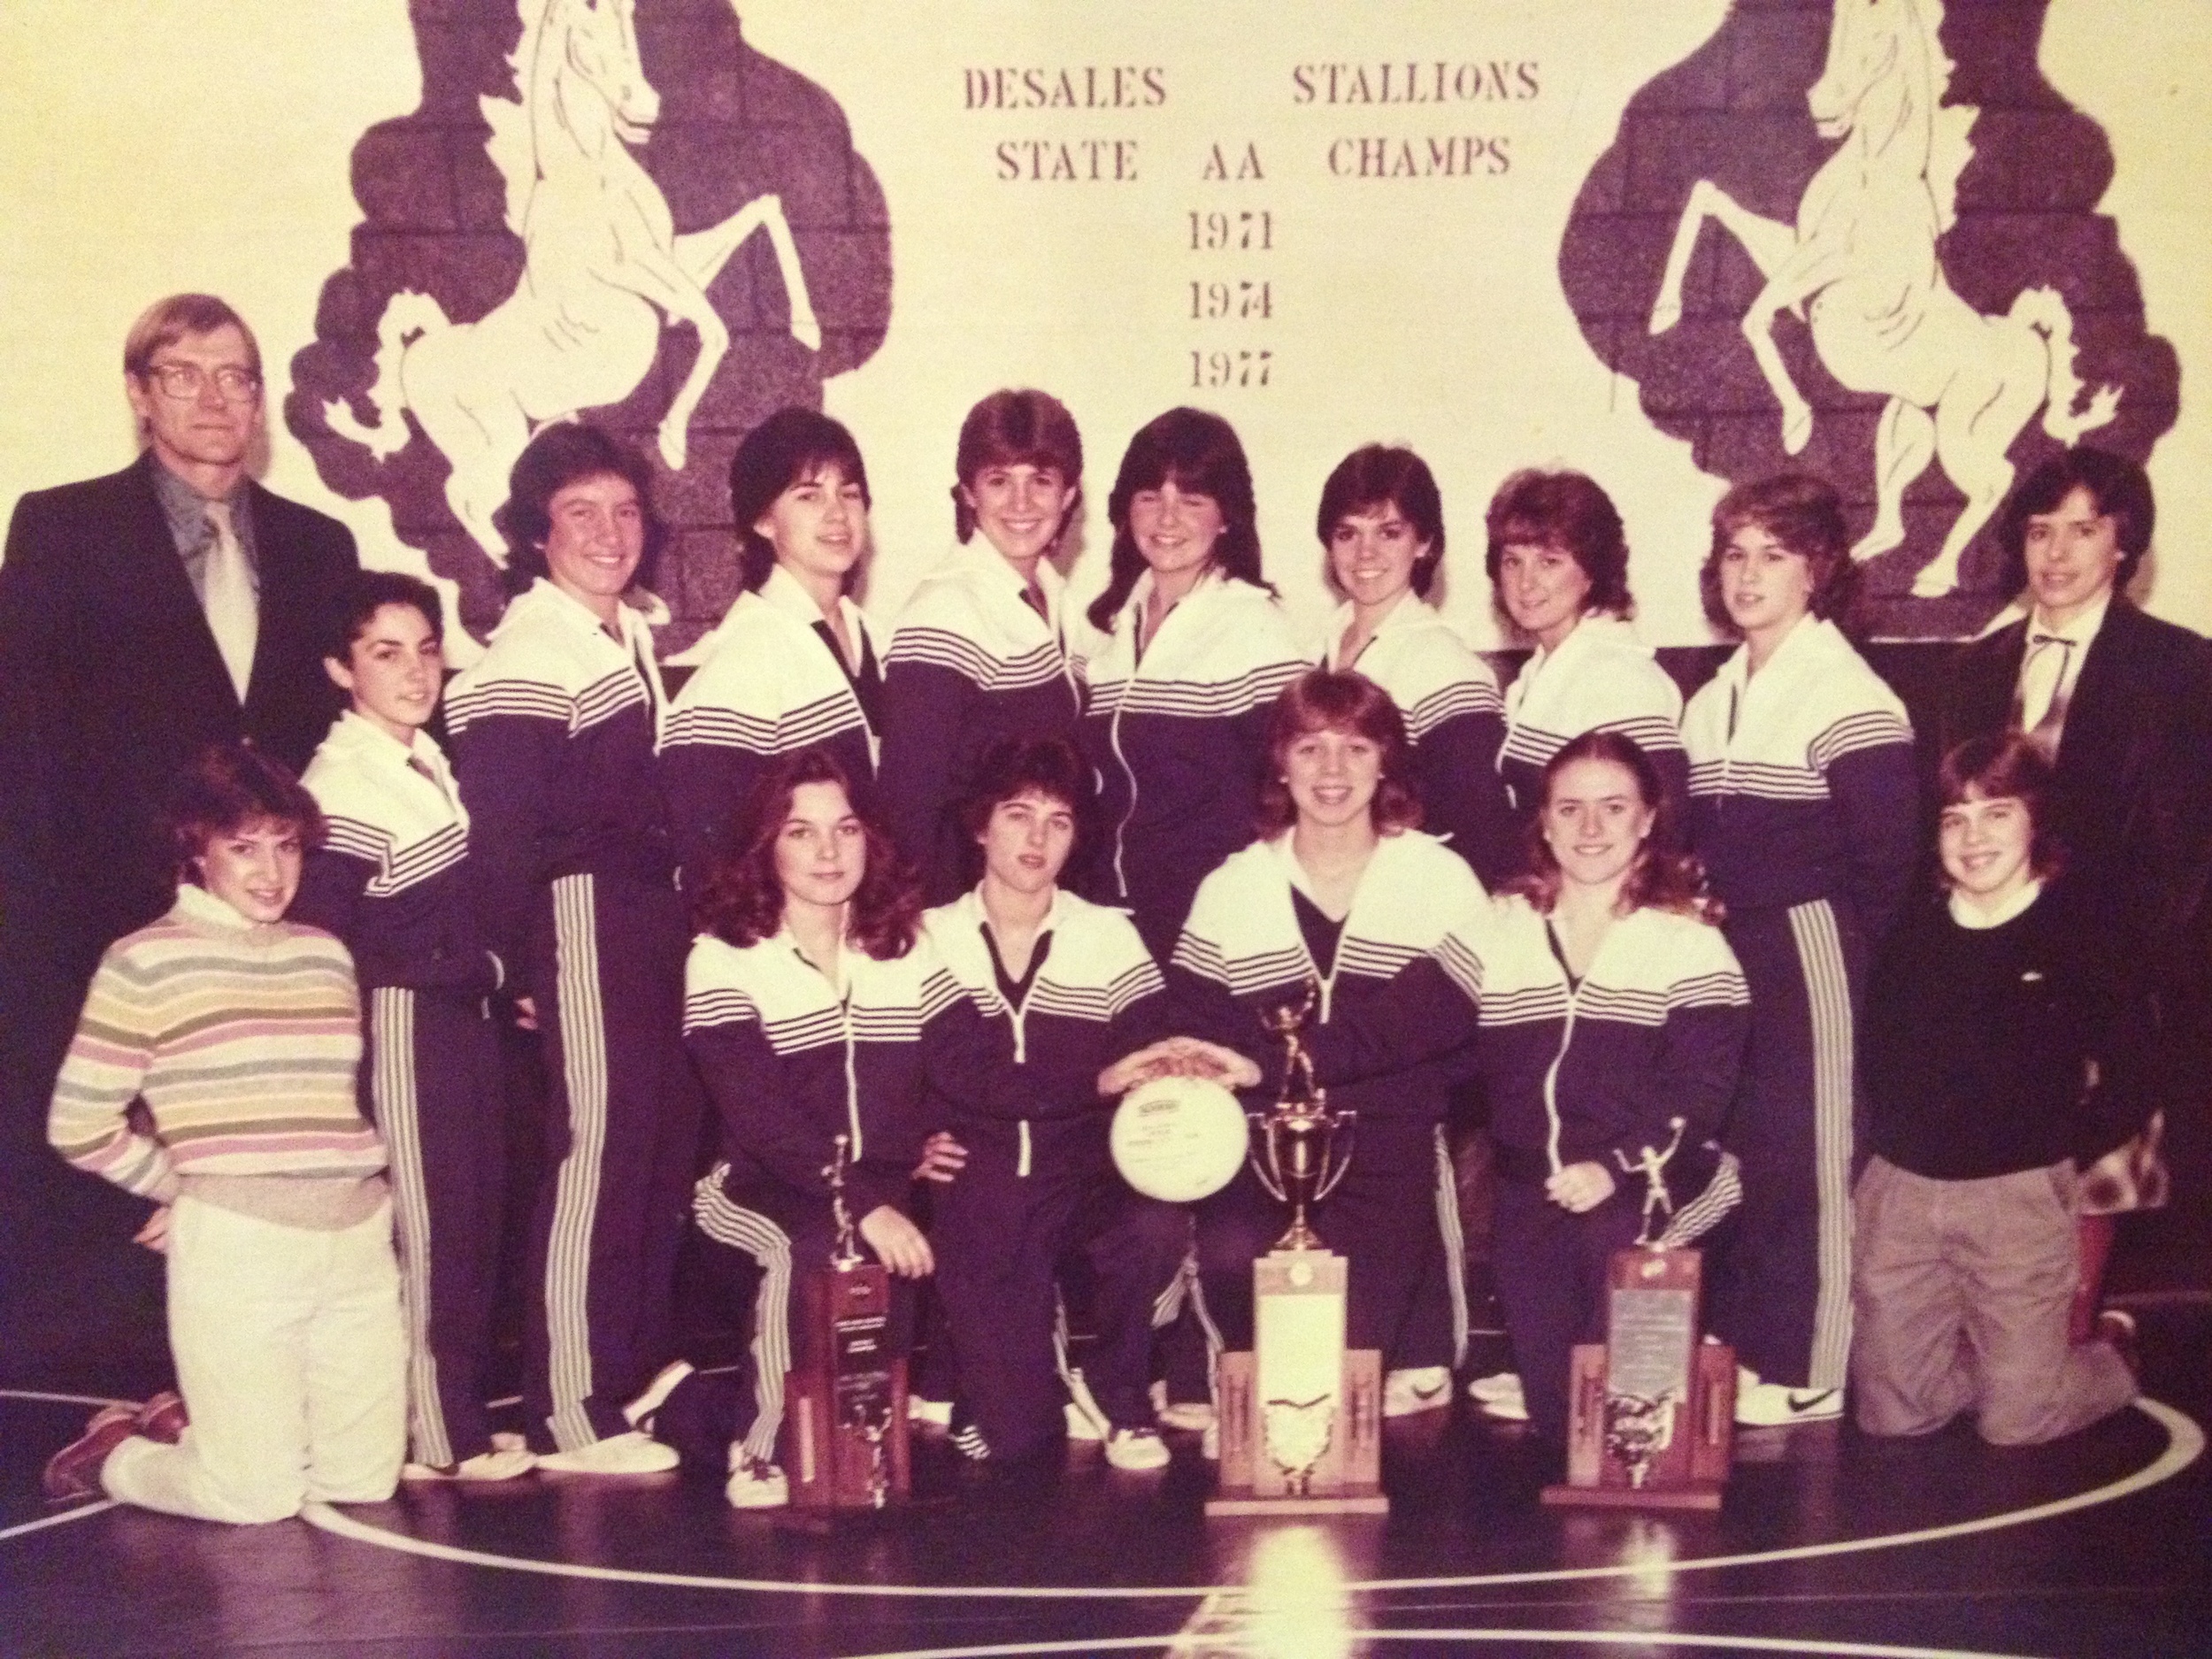   1982 STATE CHAMPIONS  Girls Volleyball 